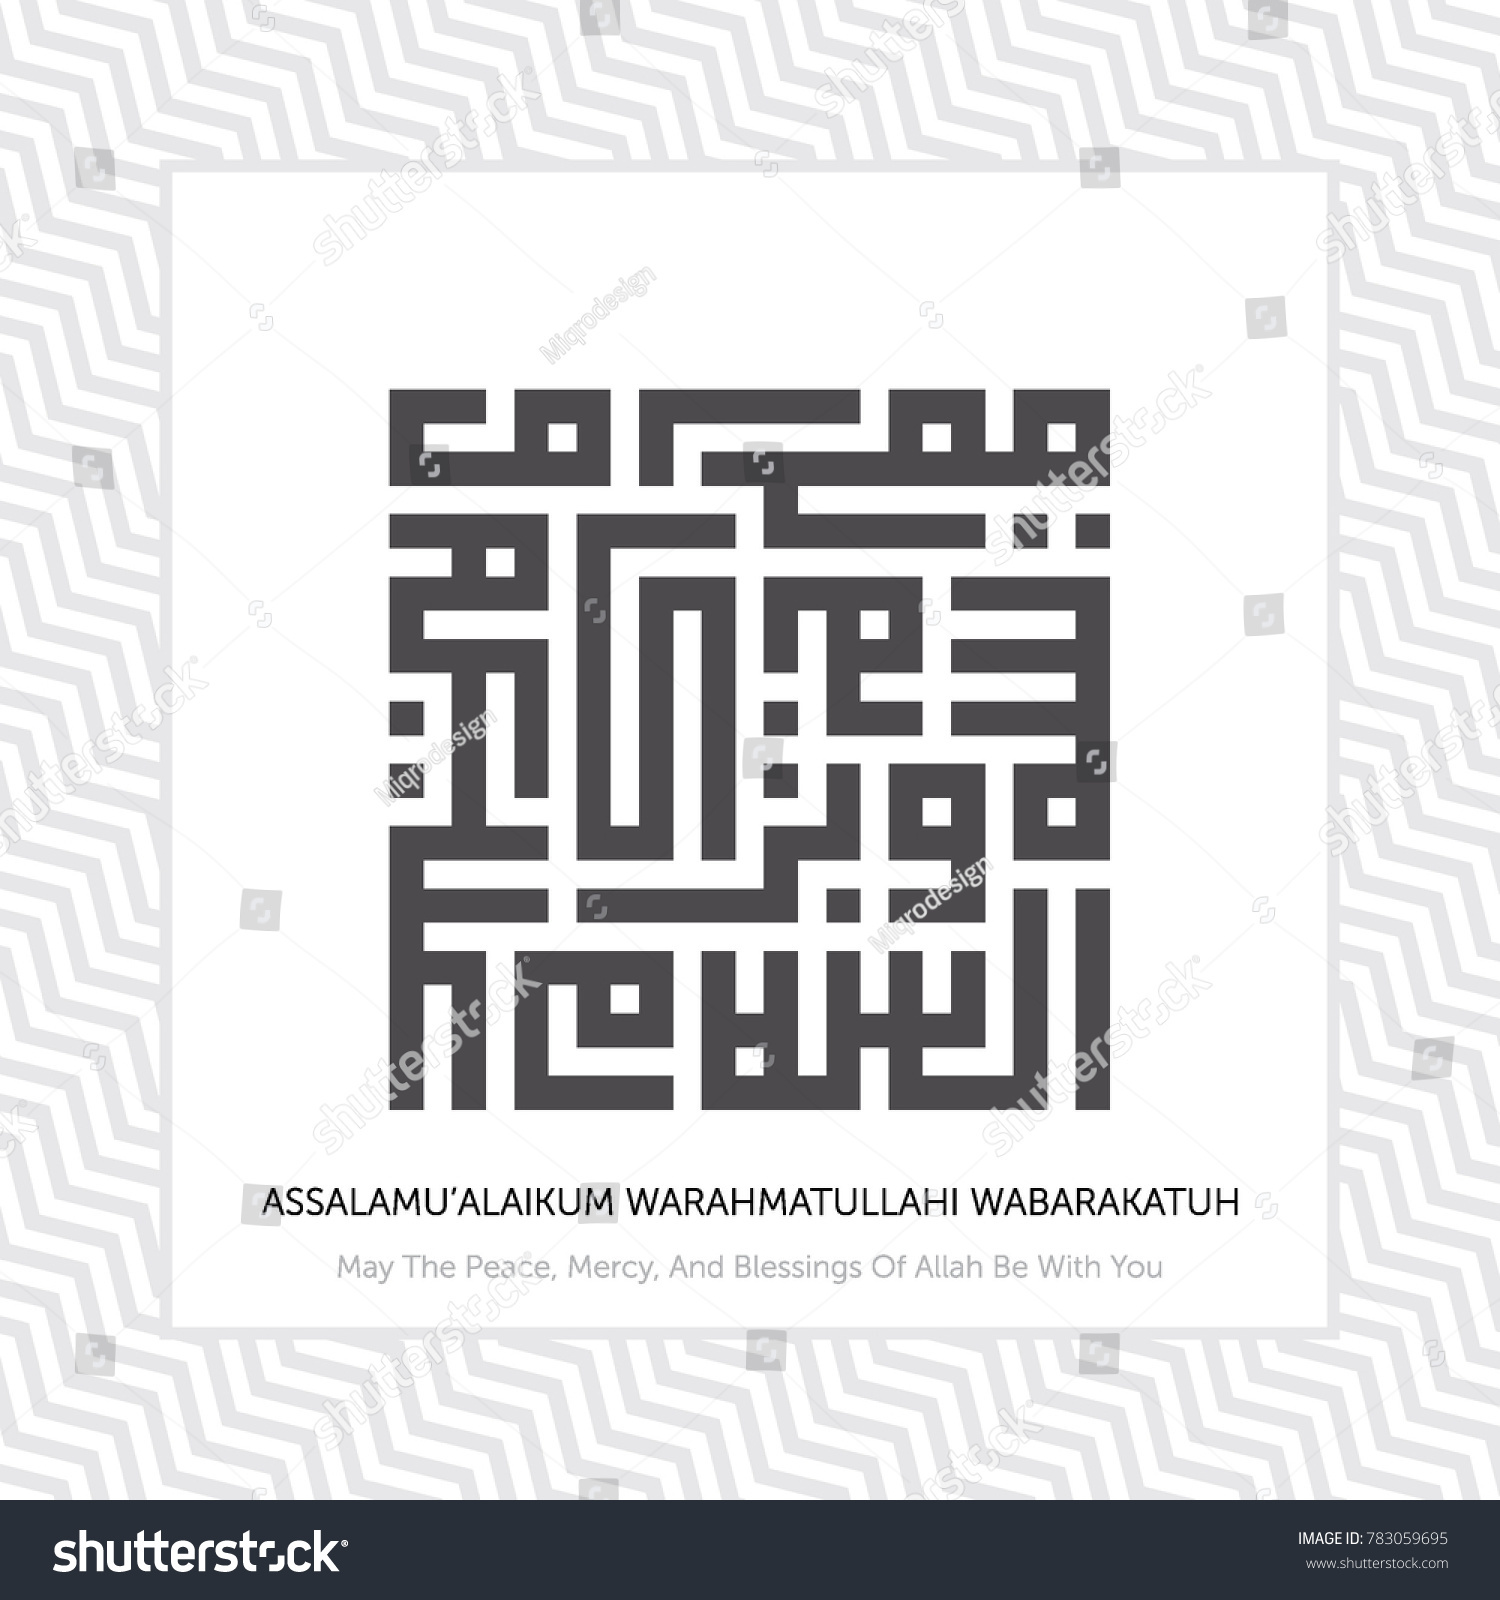 Kaligrafi Assalamualaikum Vector - Gambar Islami